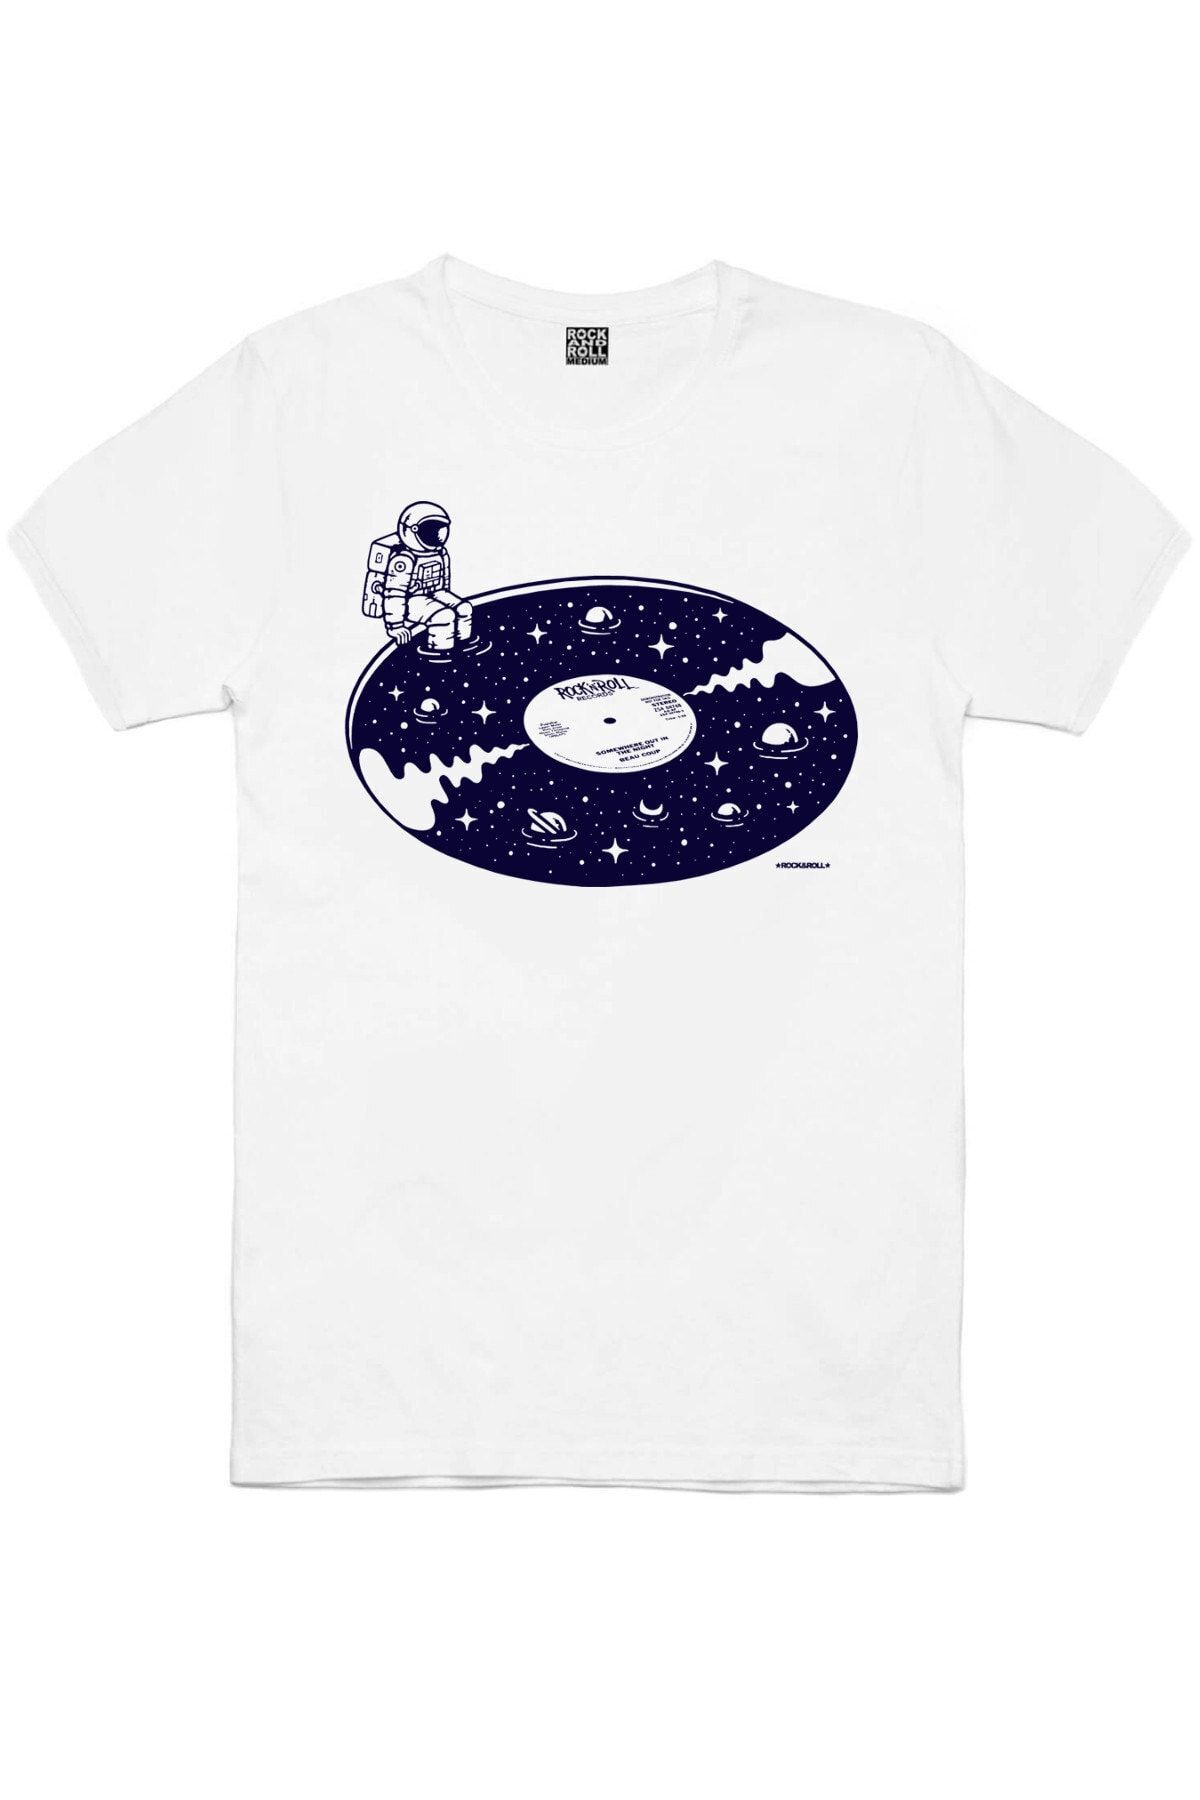 ROCKANDROLL 45lik Uzay Beyaz Kısa Kollu Erkek T-shirt